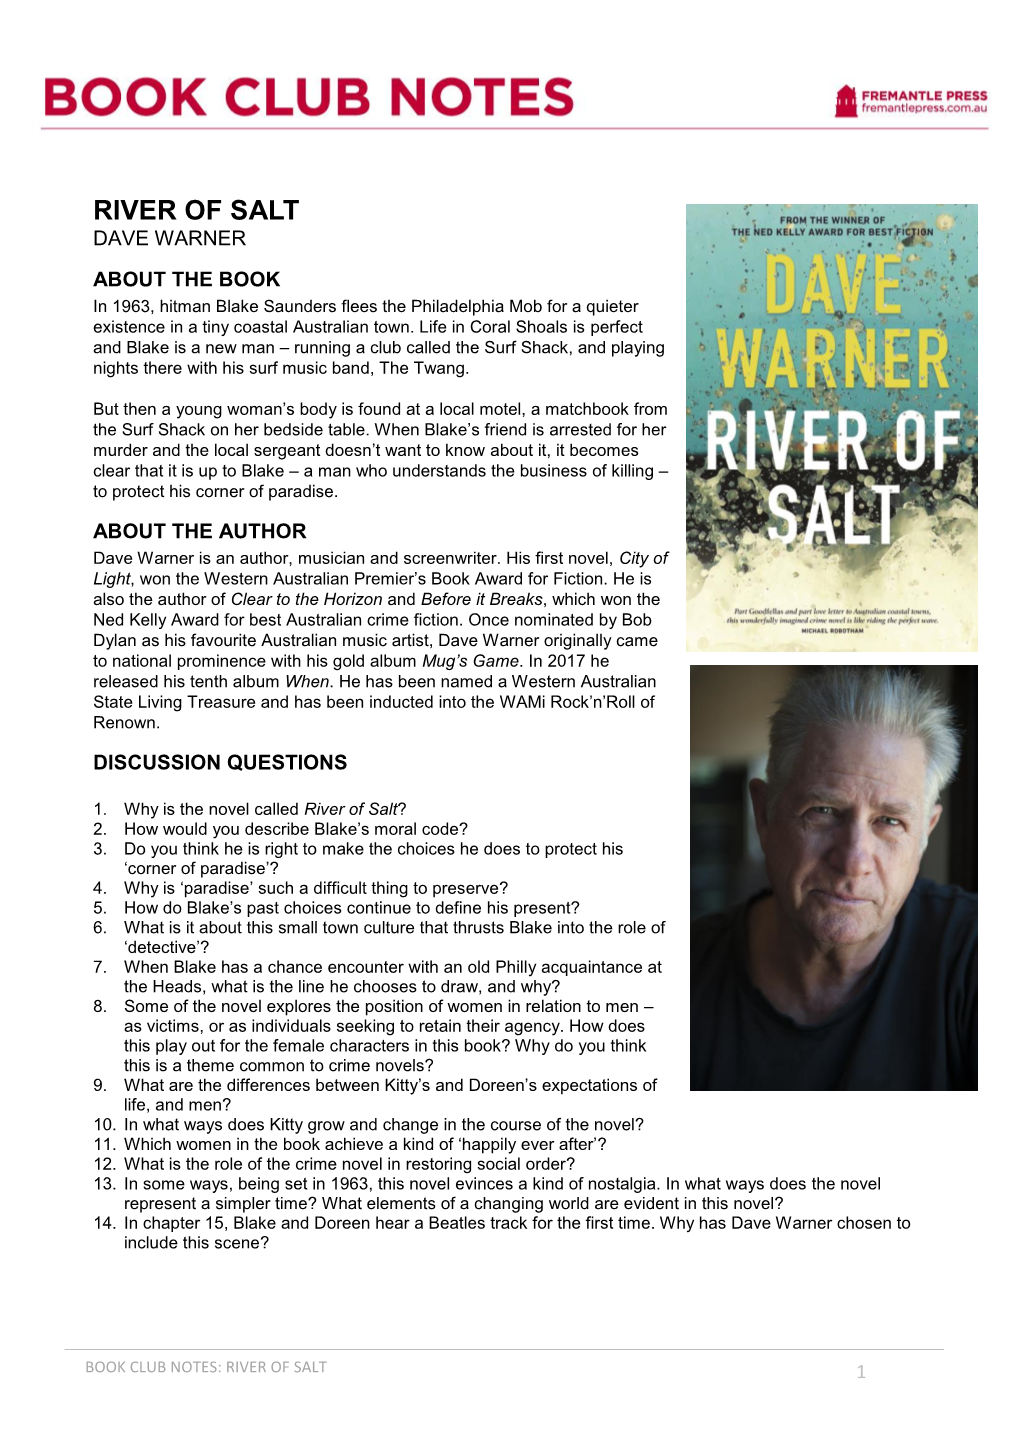 Book Club Notes: River of Salt 1